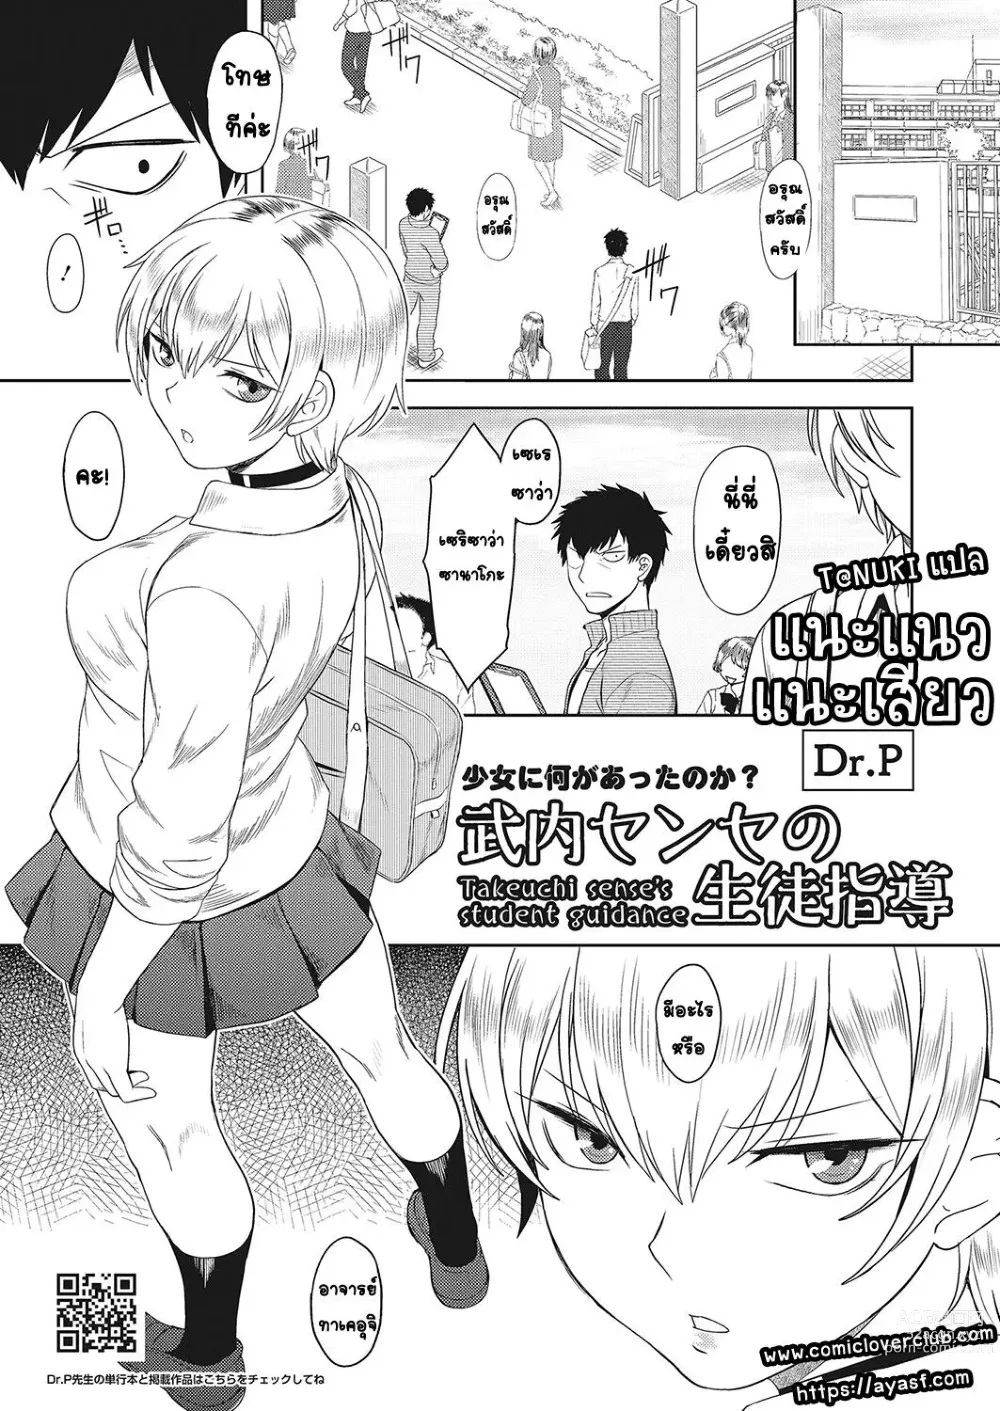 Page 1 of manga Takeuchi Sense no Seito Shidou - Takeuchi senses student guidence